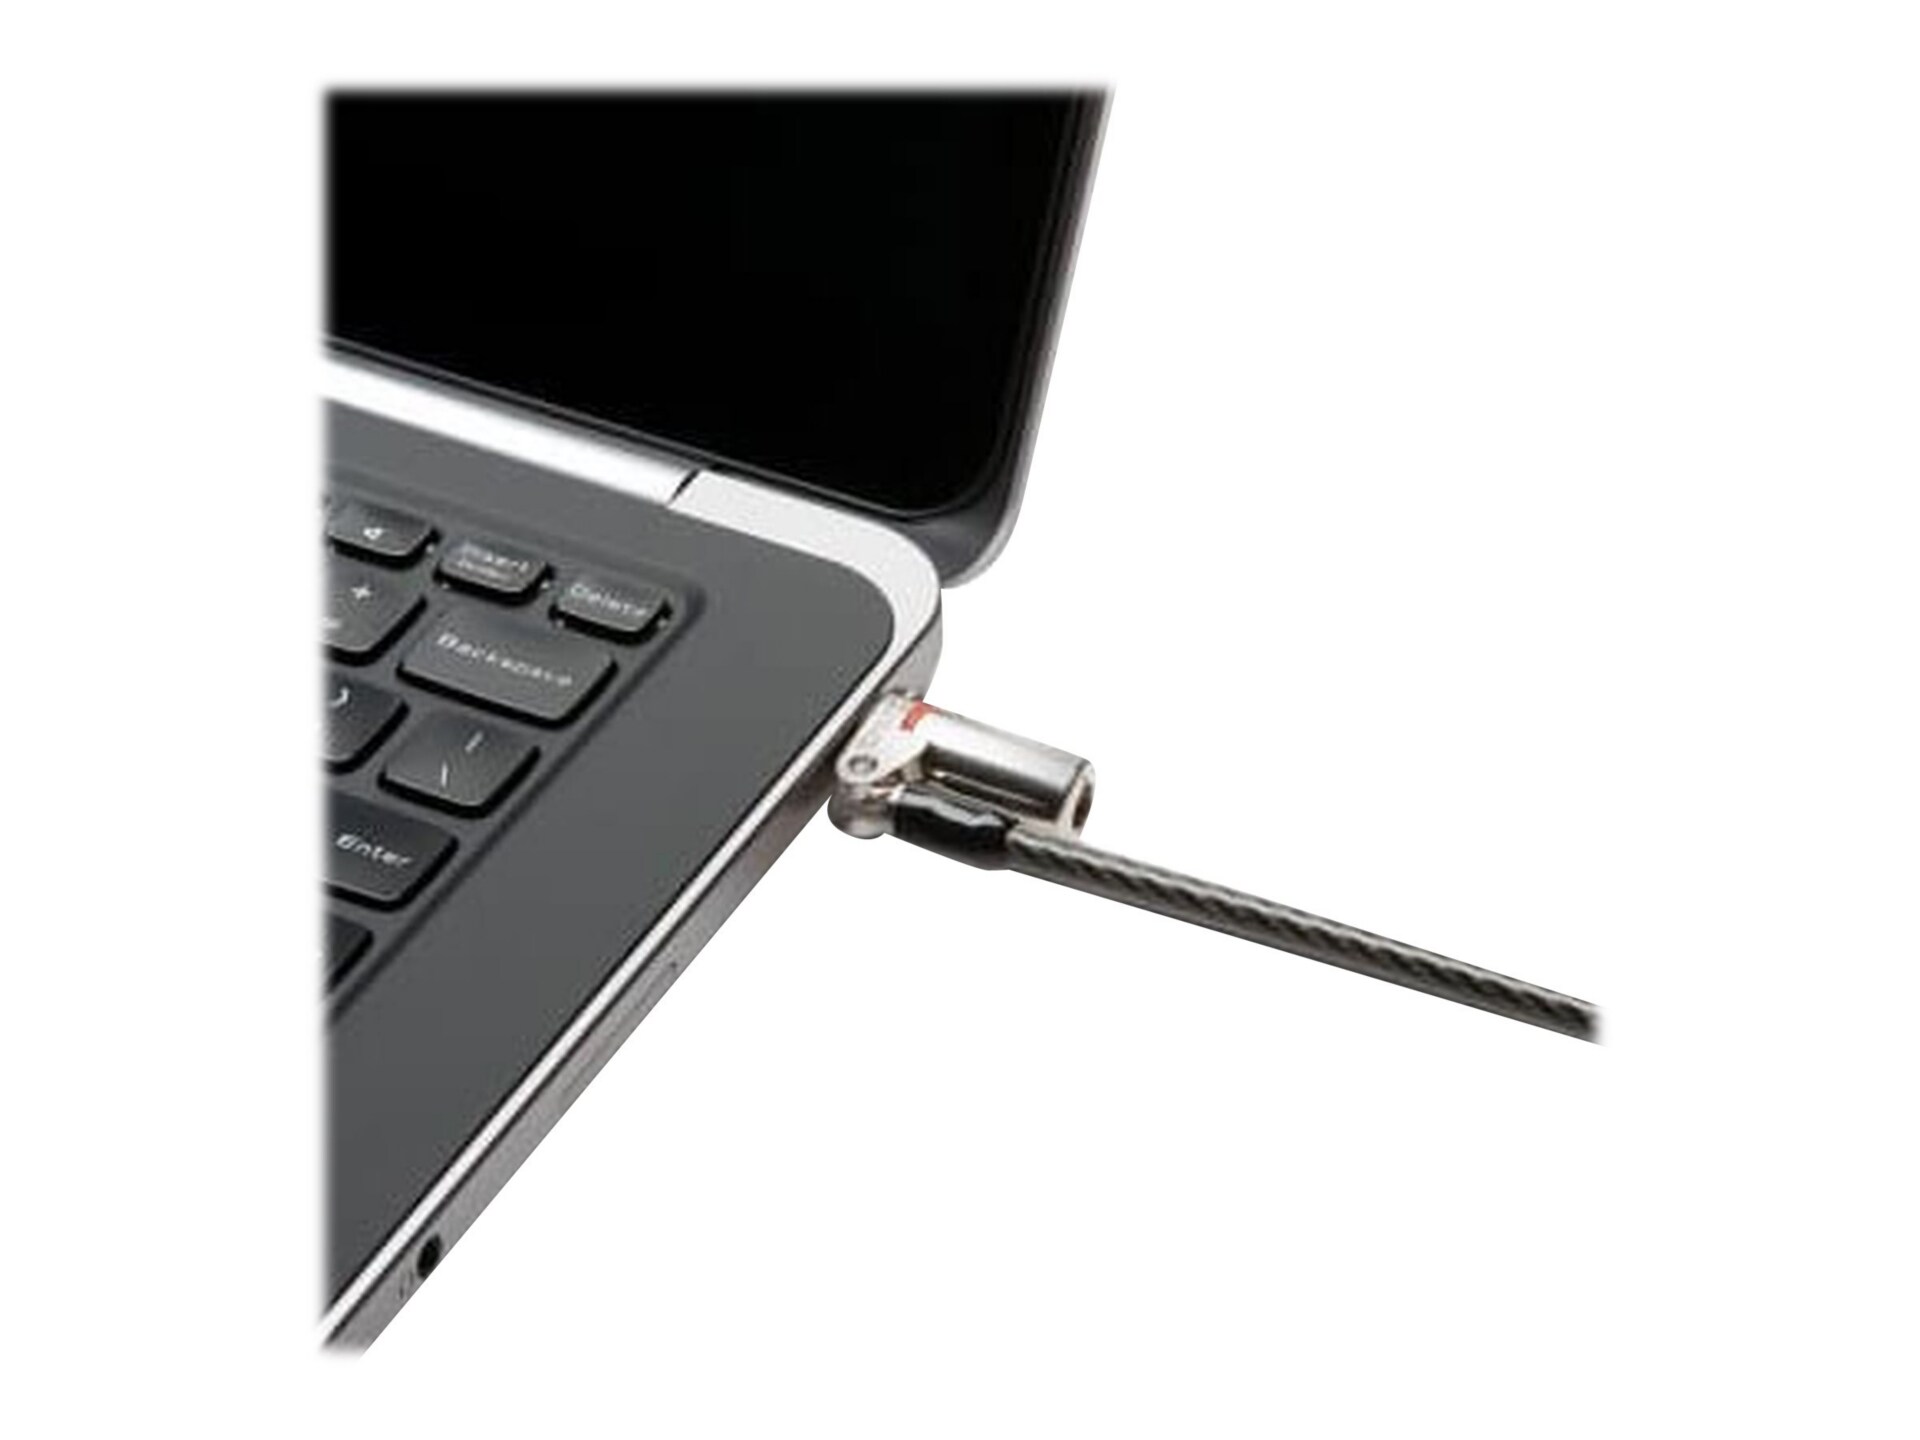 Kensington MicroSaver Ultrabook Laptop Keyed Lock security cable lock set